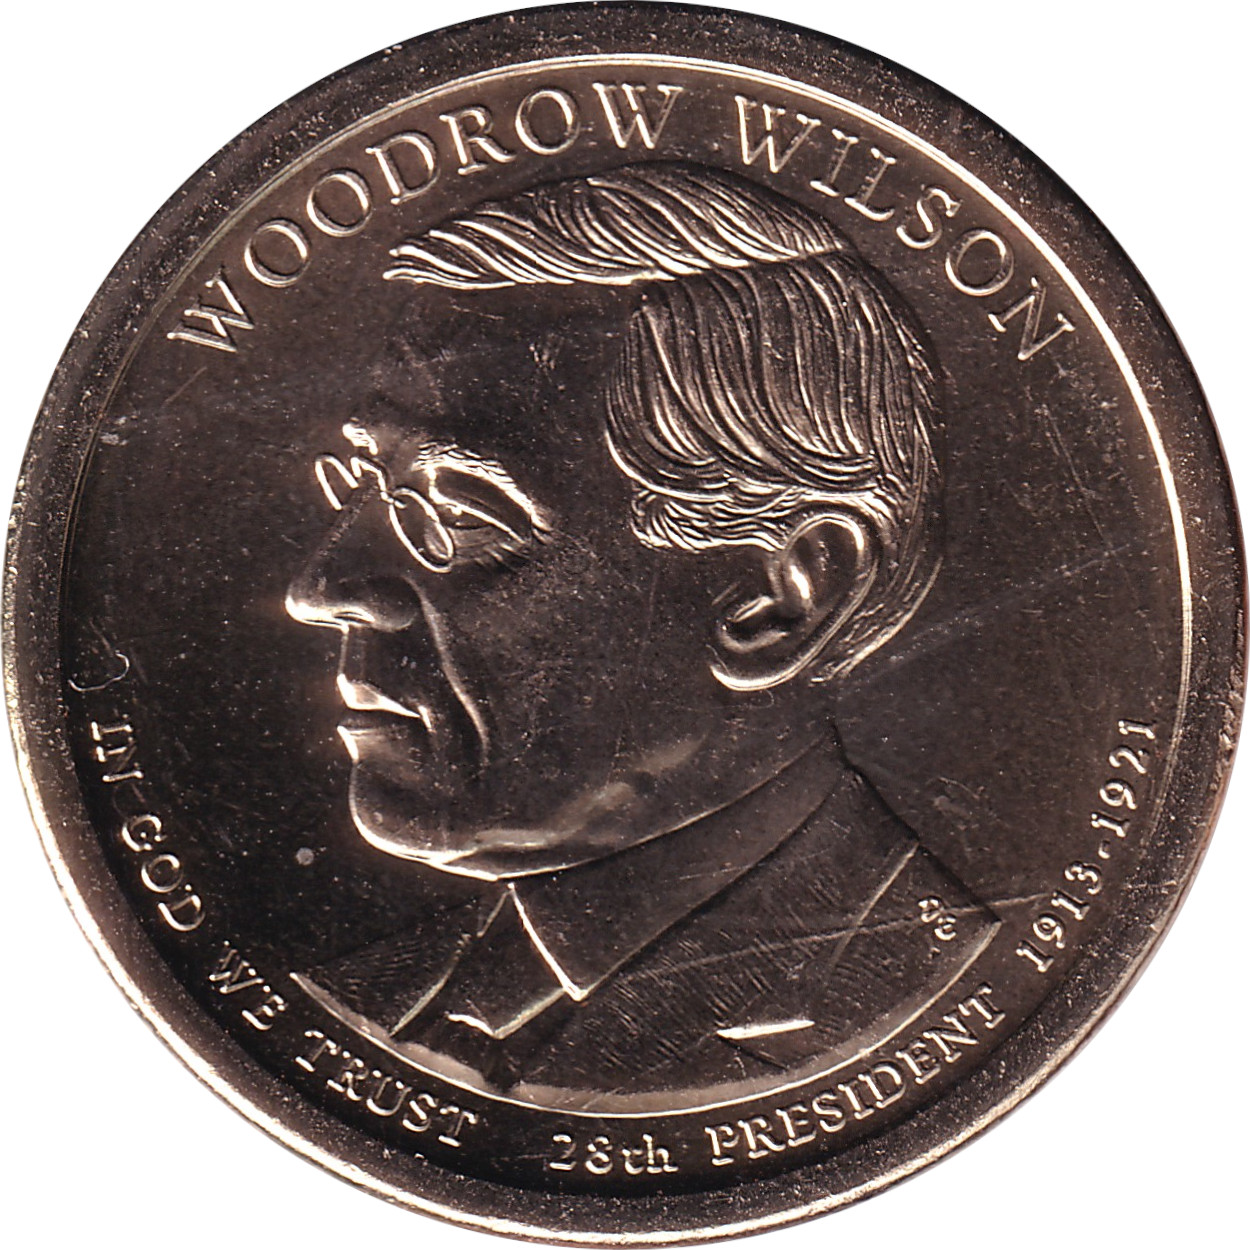 1 dollar - Woodrow Wilson